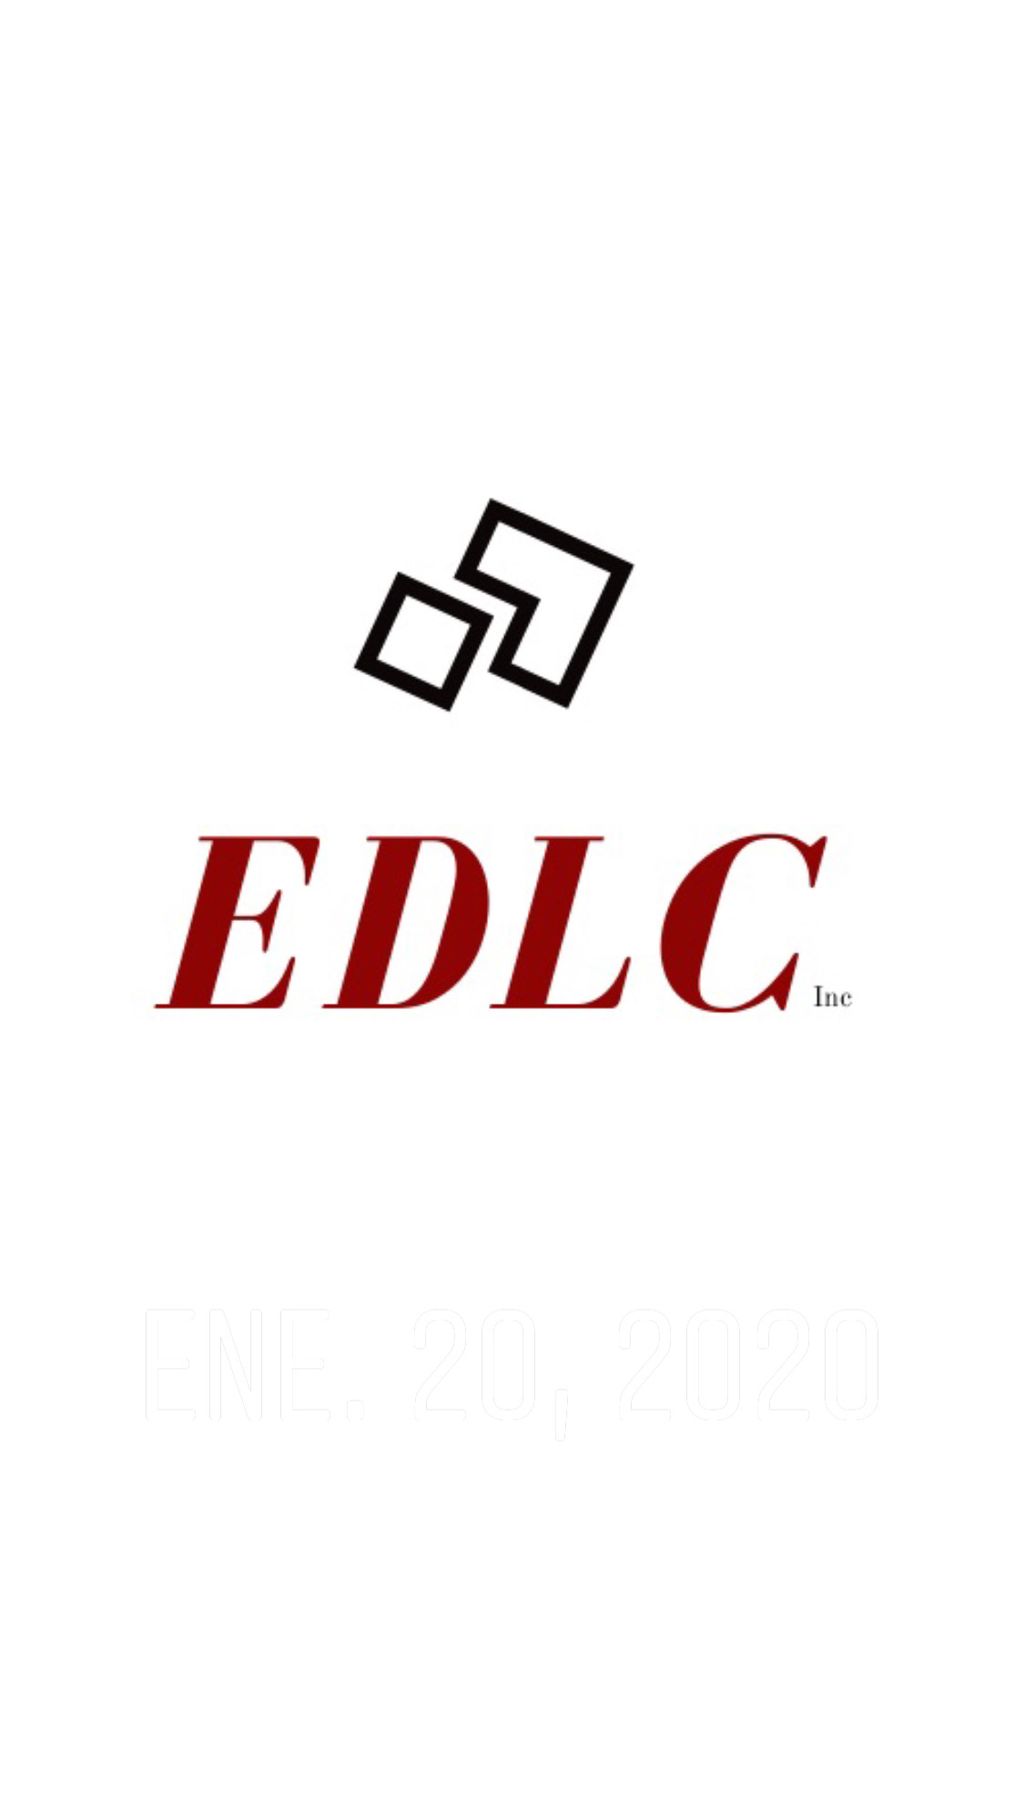 Edlc renovations groups LLC